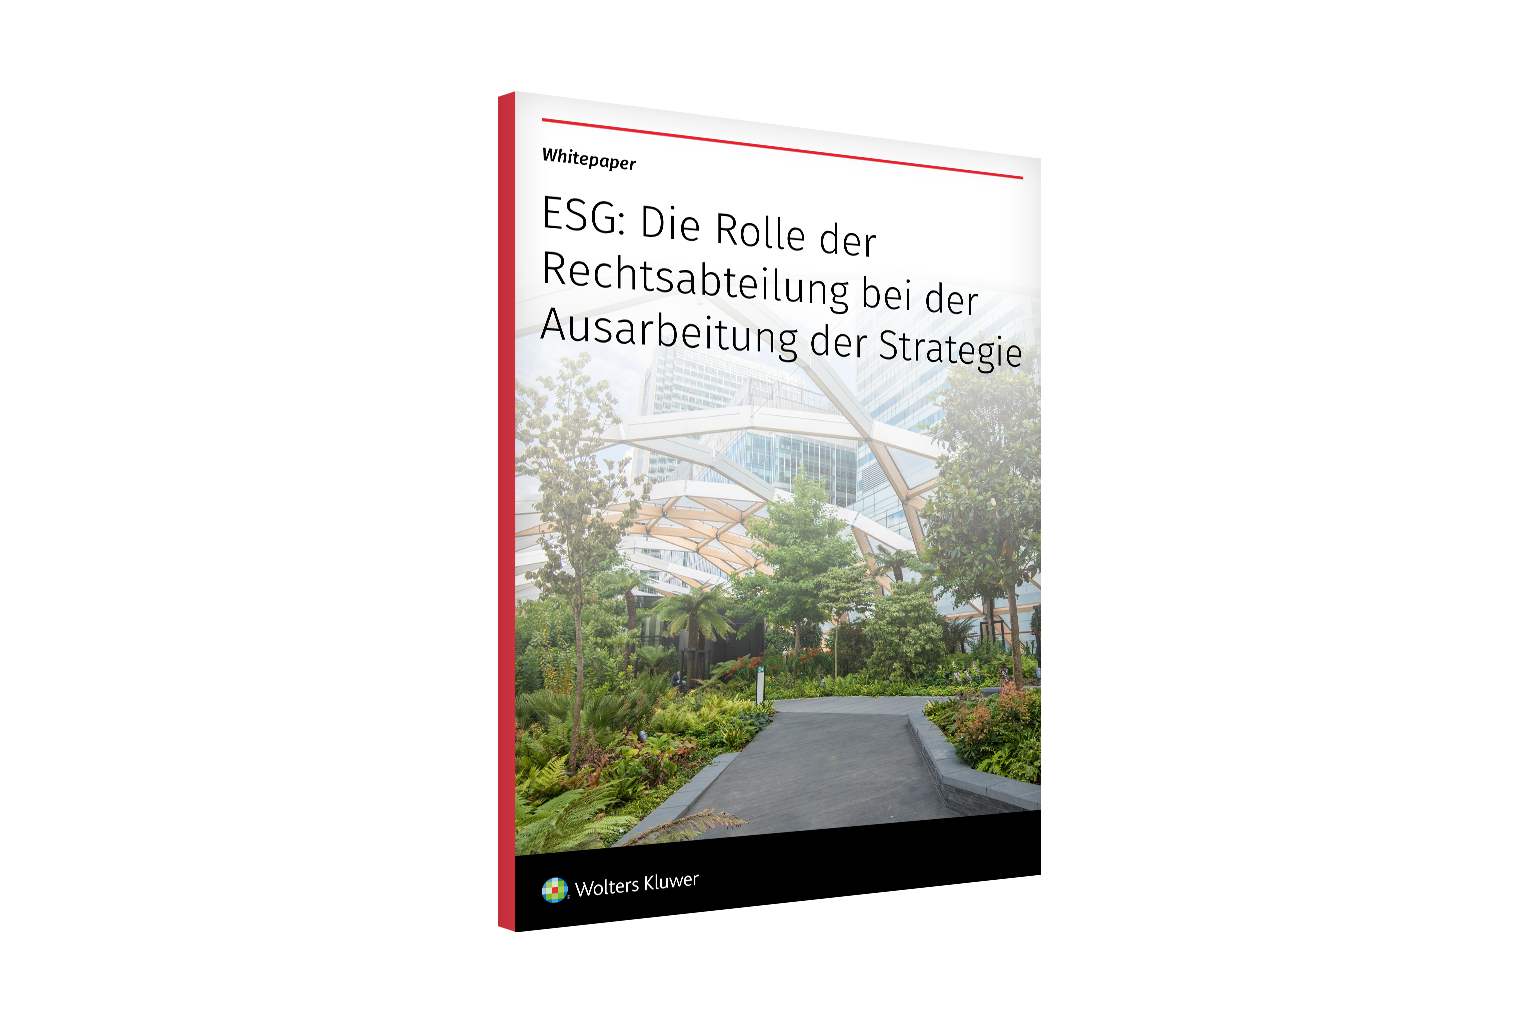 3D cover image of whitepaper for ESG campaign DE